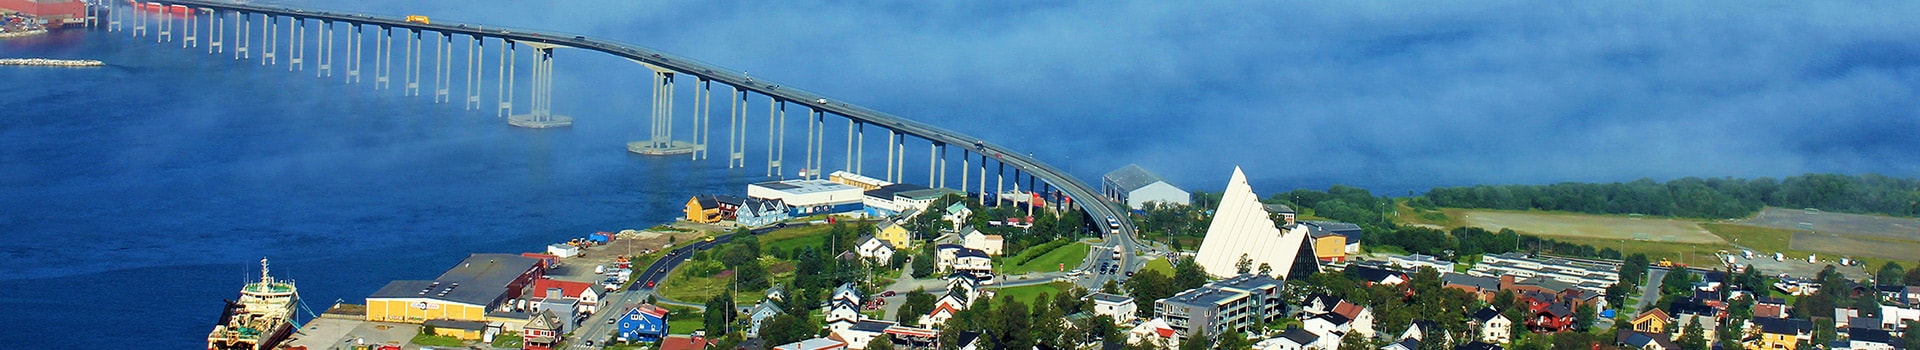 Amburgo - Tromso/langnes